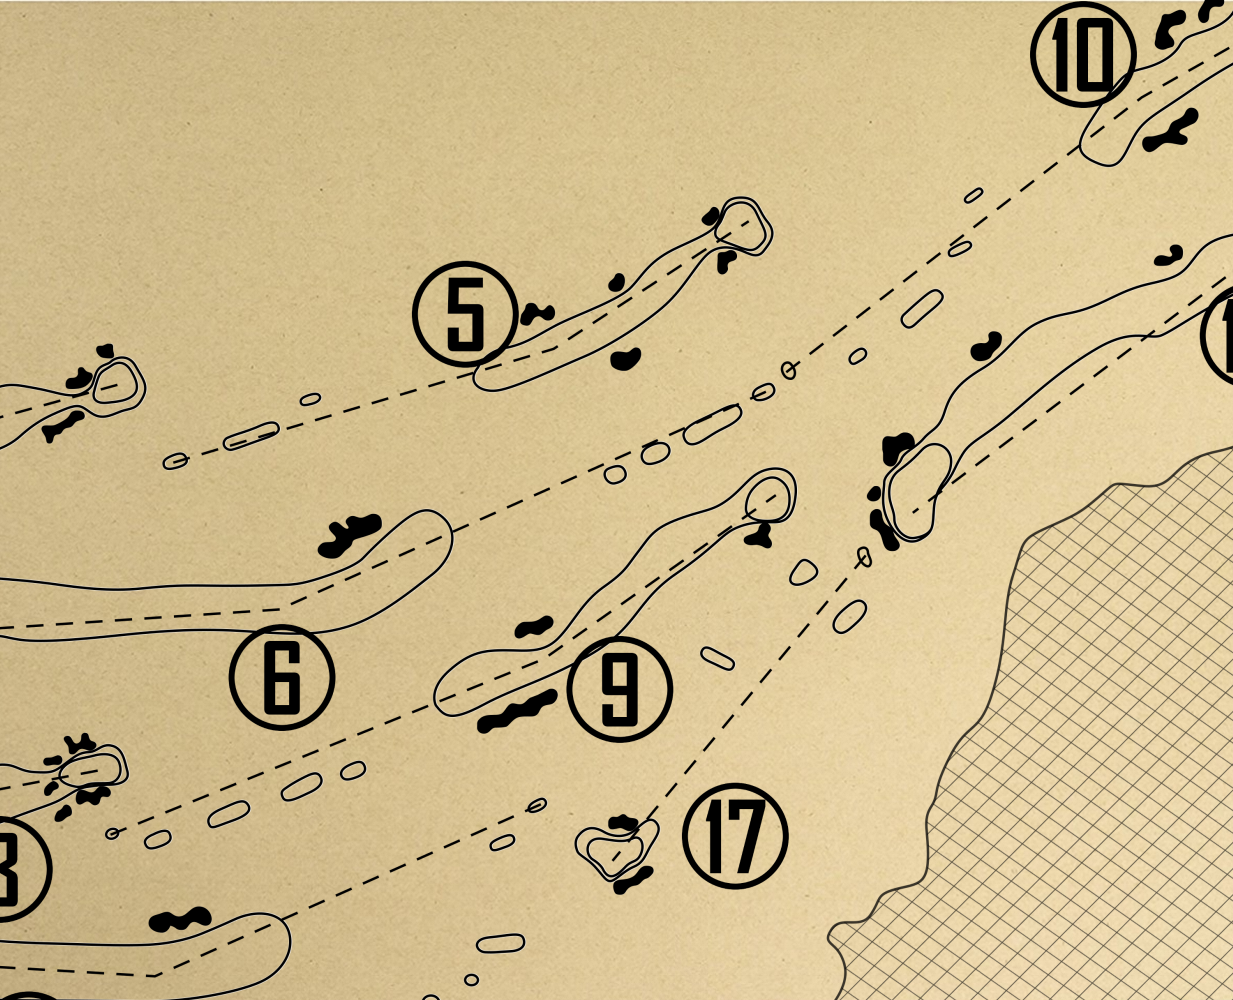 Poipu Bay Golf Course Outline (Print)